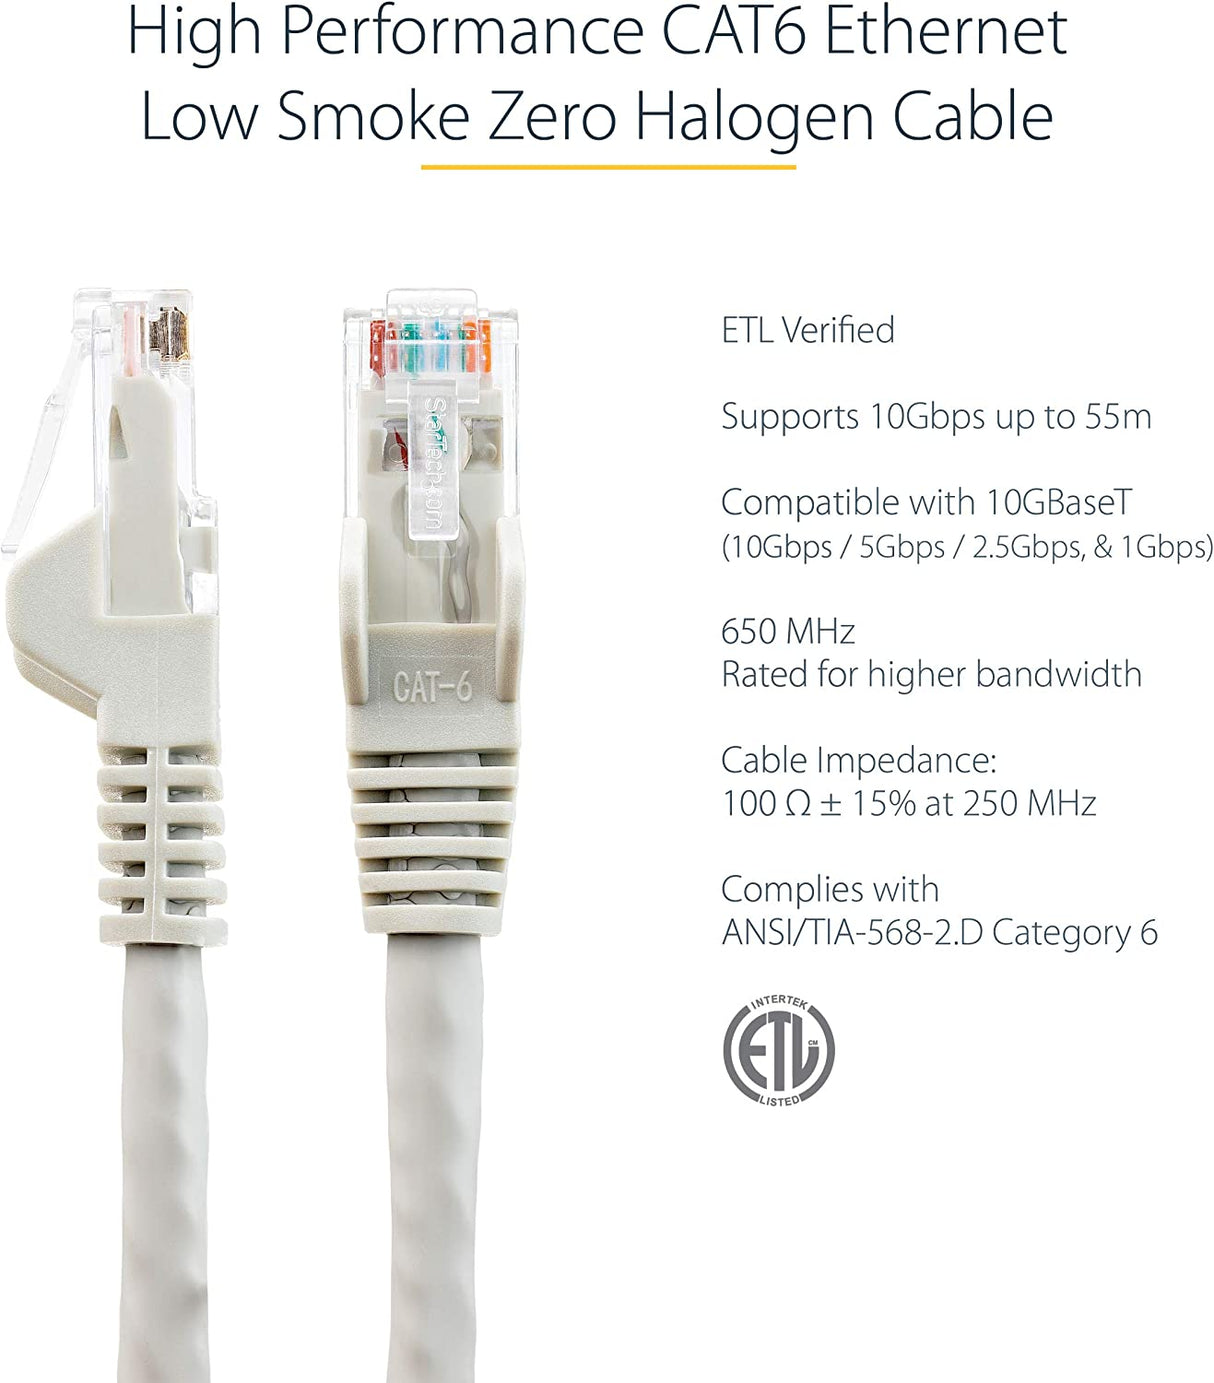 Startech 3ft (90cm) CAT6 Ethernet Cable - LSZH (Low Smoke Zero Halogen) - 10 Gigabit 650MHz 100W PoE RJ45 UTP Network Patch Cord Snagless w/Strain Relief - Gray CAT 6, ETL Verified (N6LPATCH3GR) 3 ft Gray